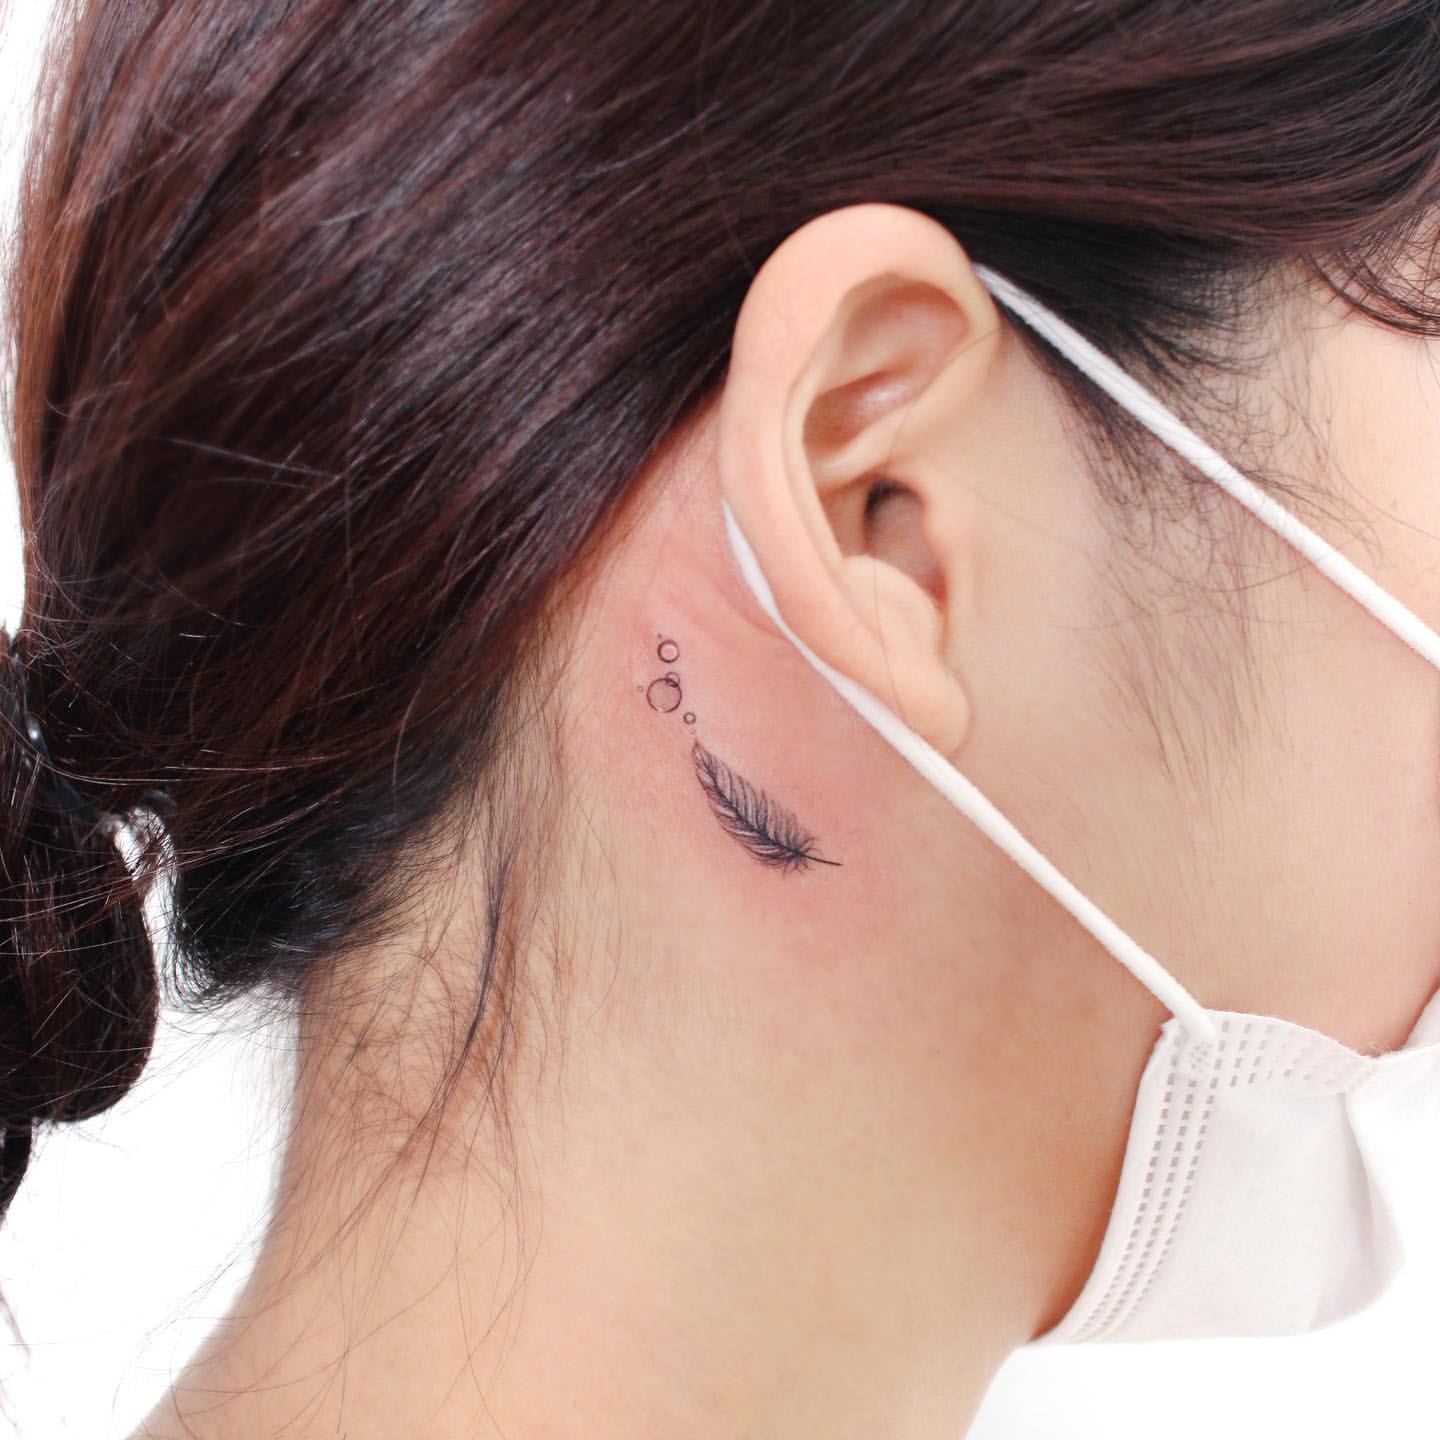 Behind the Ear Tattoos 22